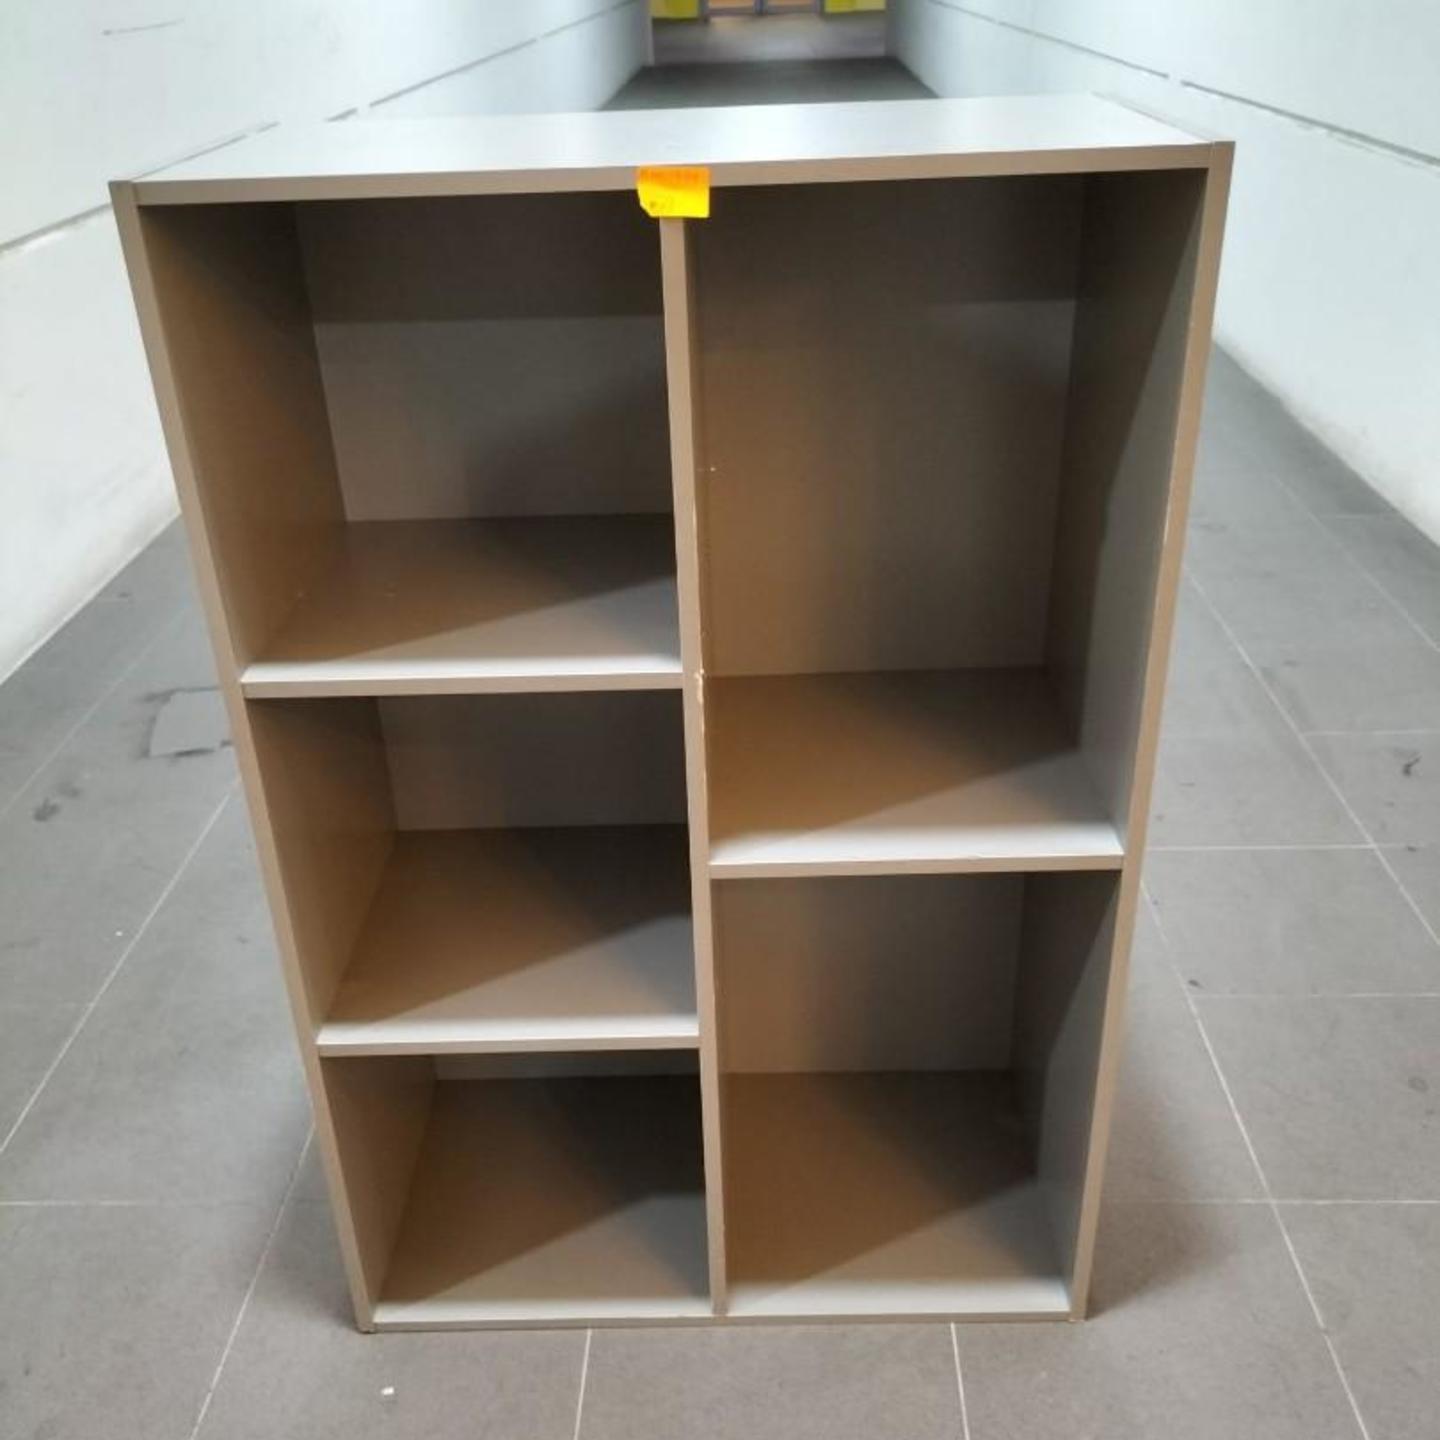 KEYA 5 Cube Display Bookshelf in GREY